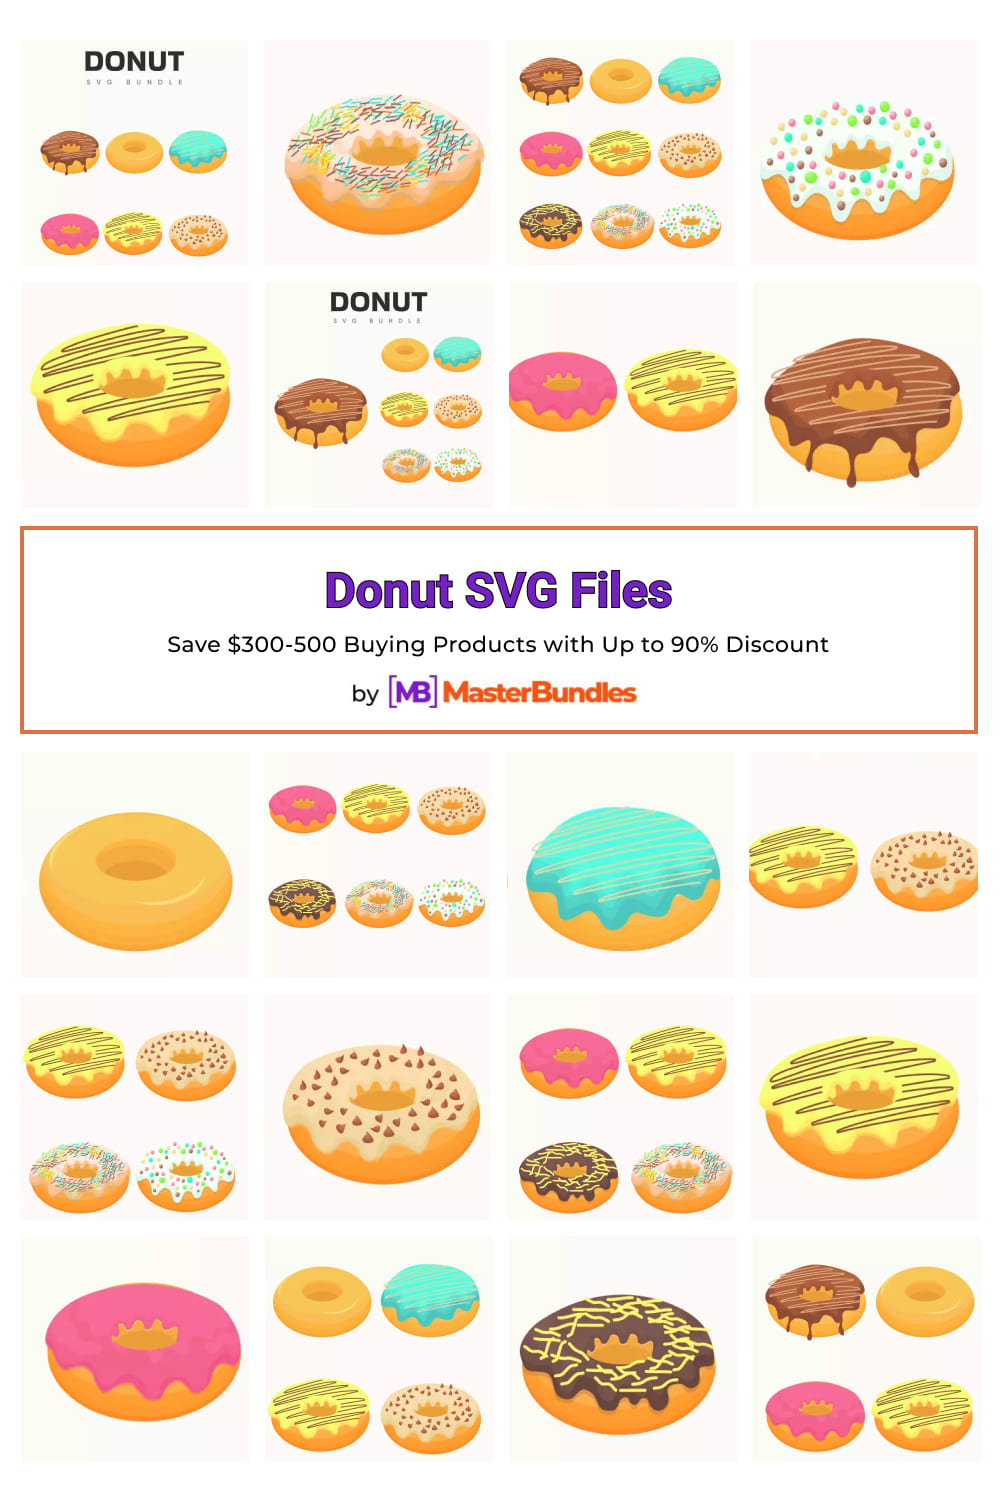 Donut SVG Files Pinterest image.